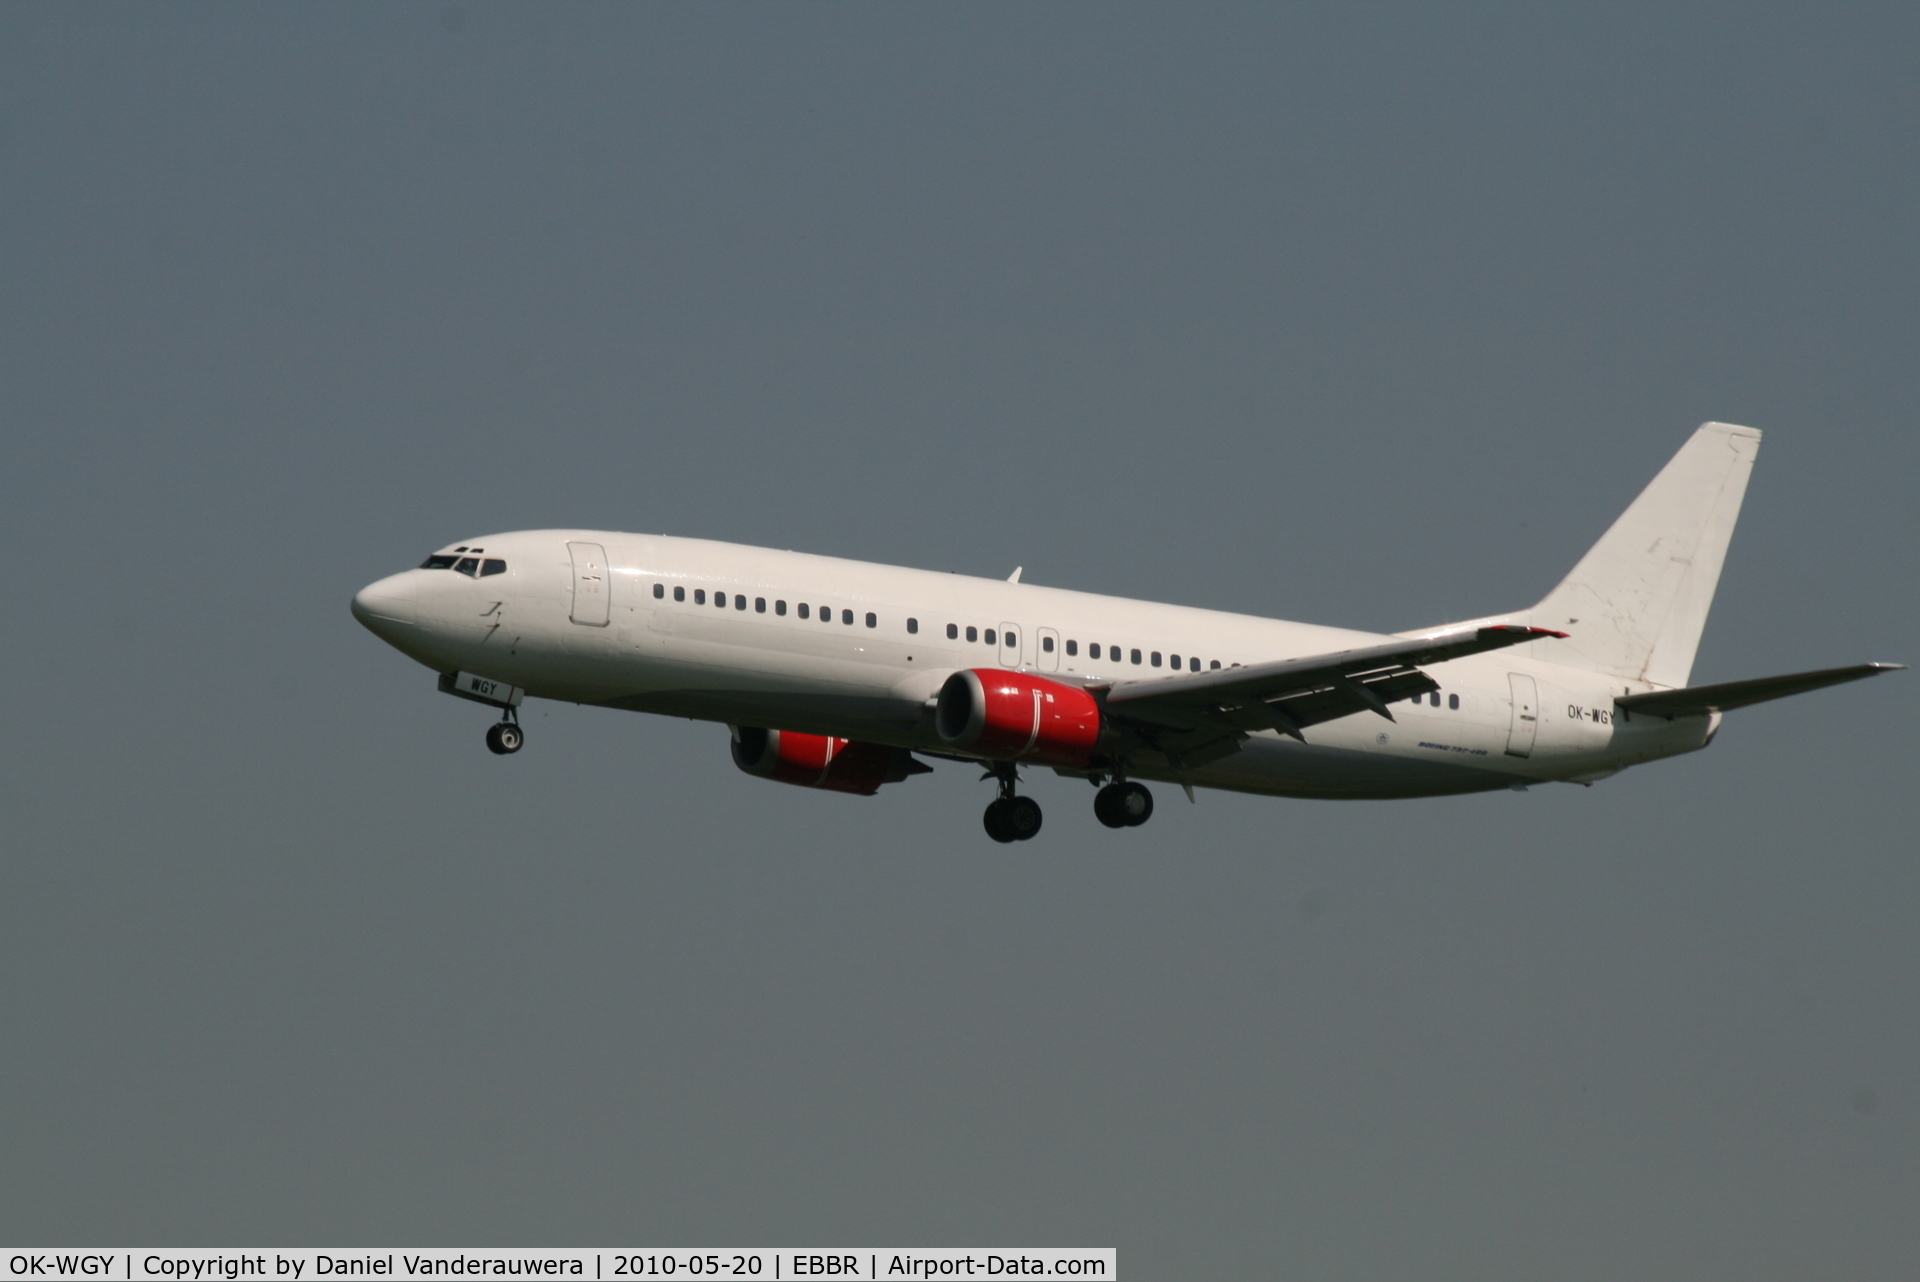 OK-WGY, 1991 Boeing 737-436 C/N 25839, Arrival of flight OK630 to RWY 25L